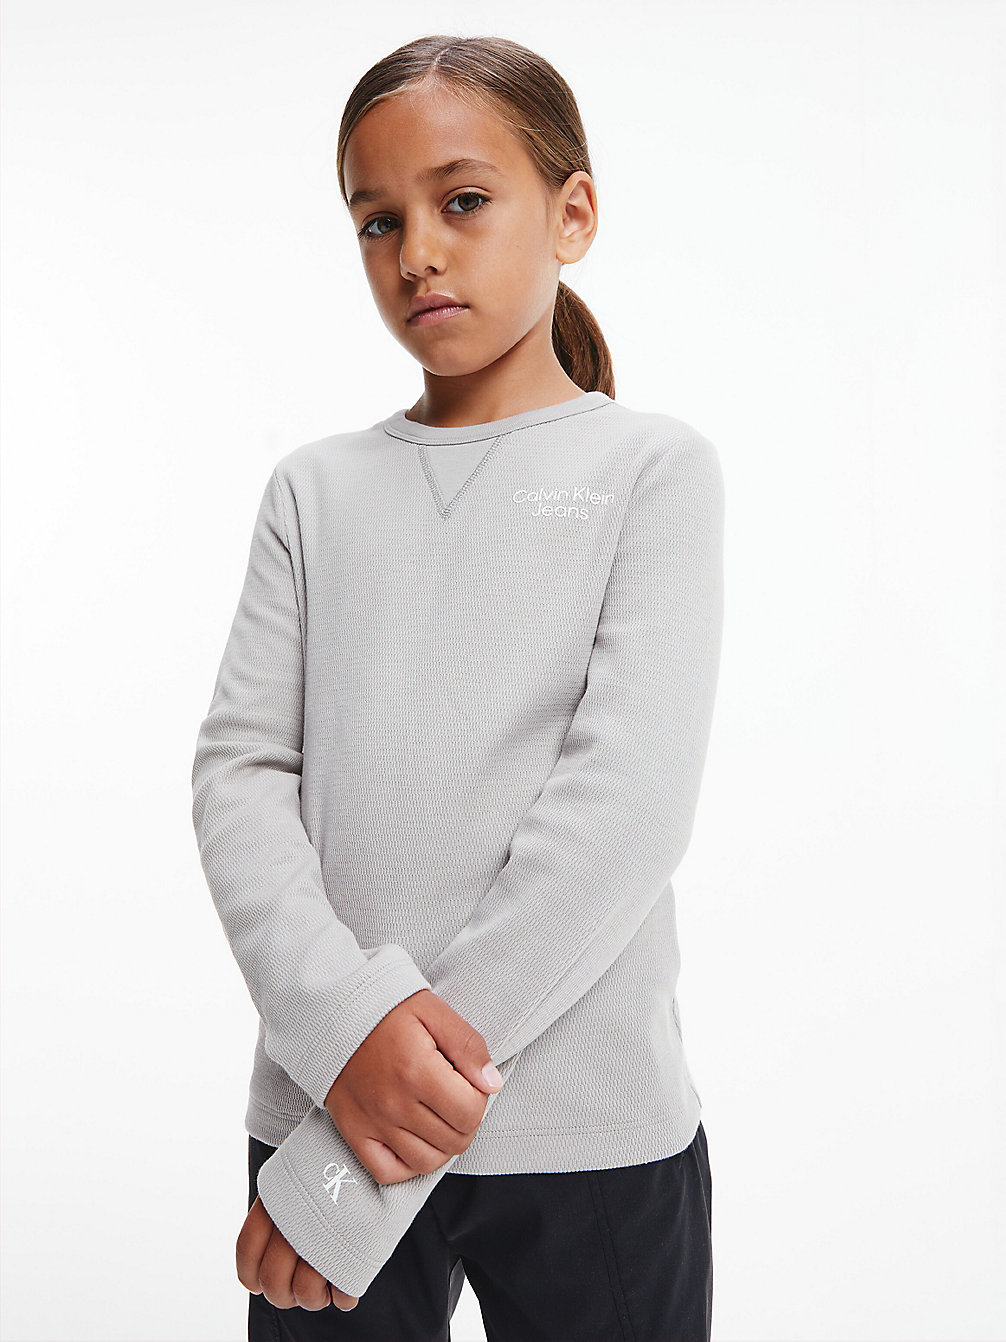 MERCURY GREY Textured Long Sleeve Top undefined boys Calvin Klein